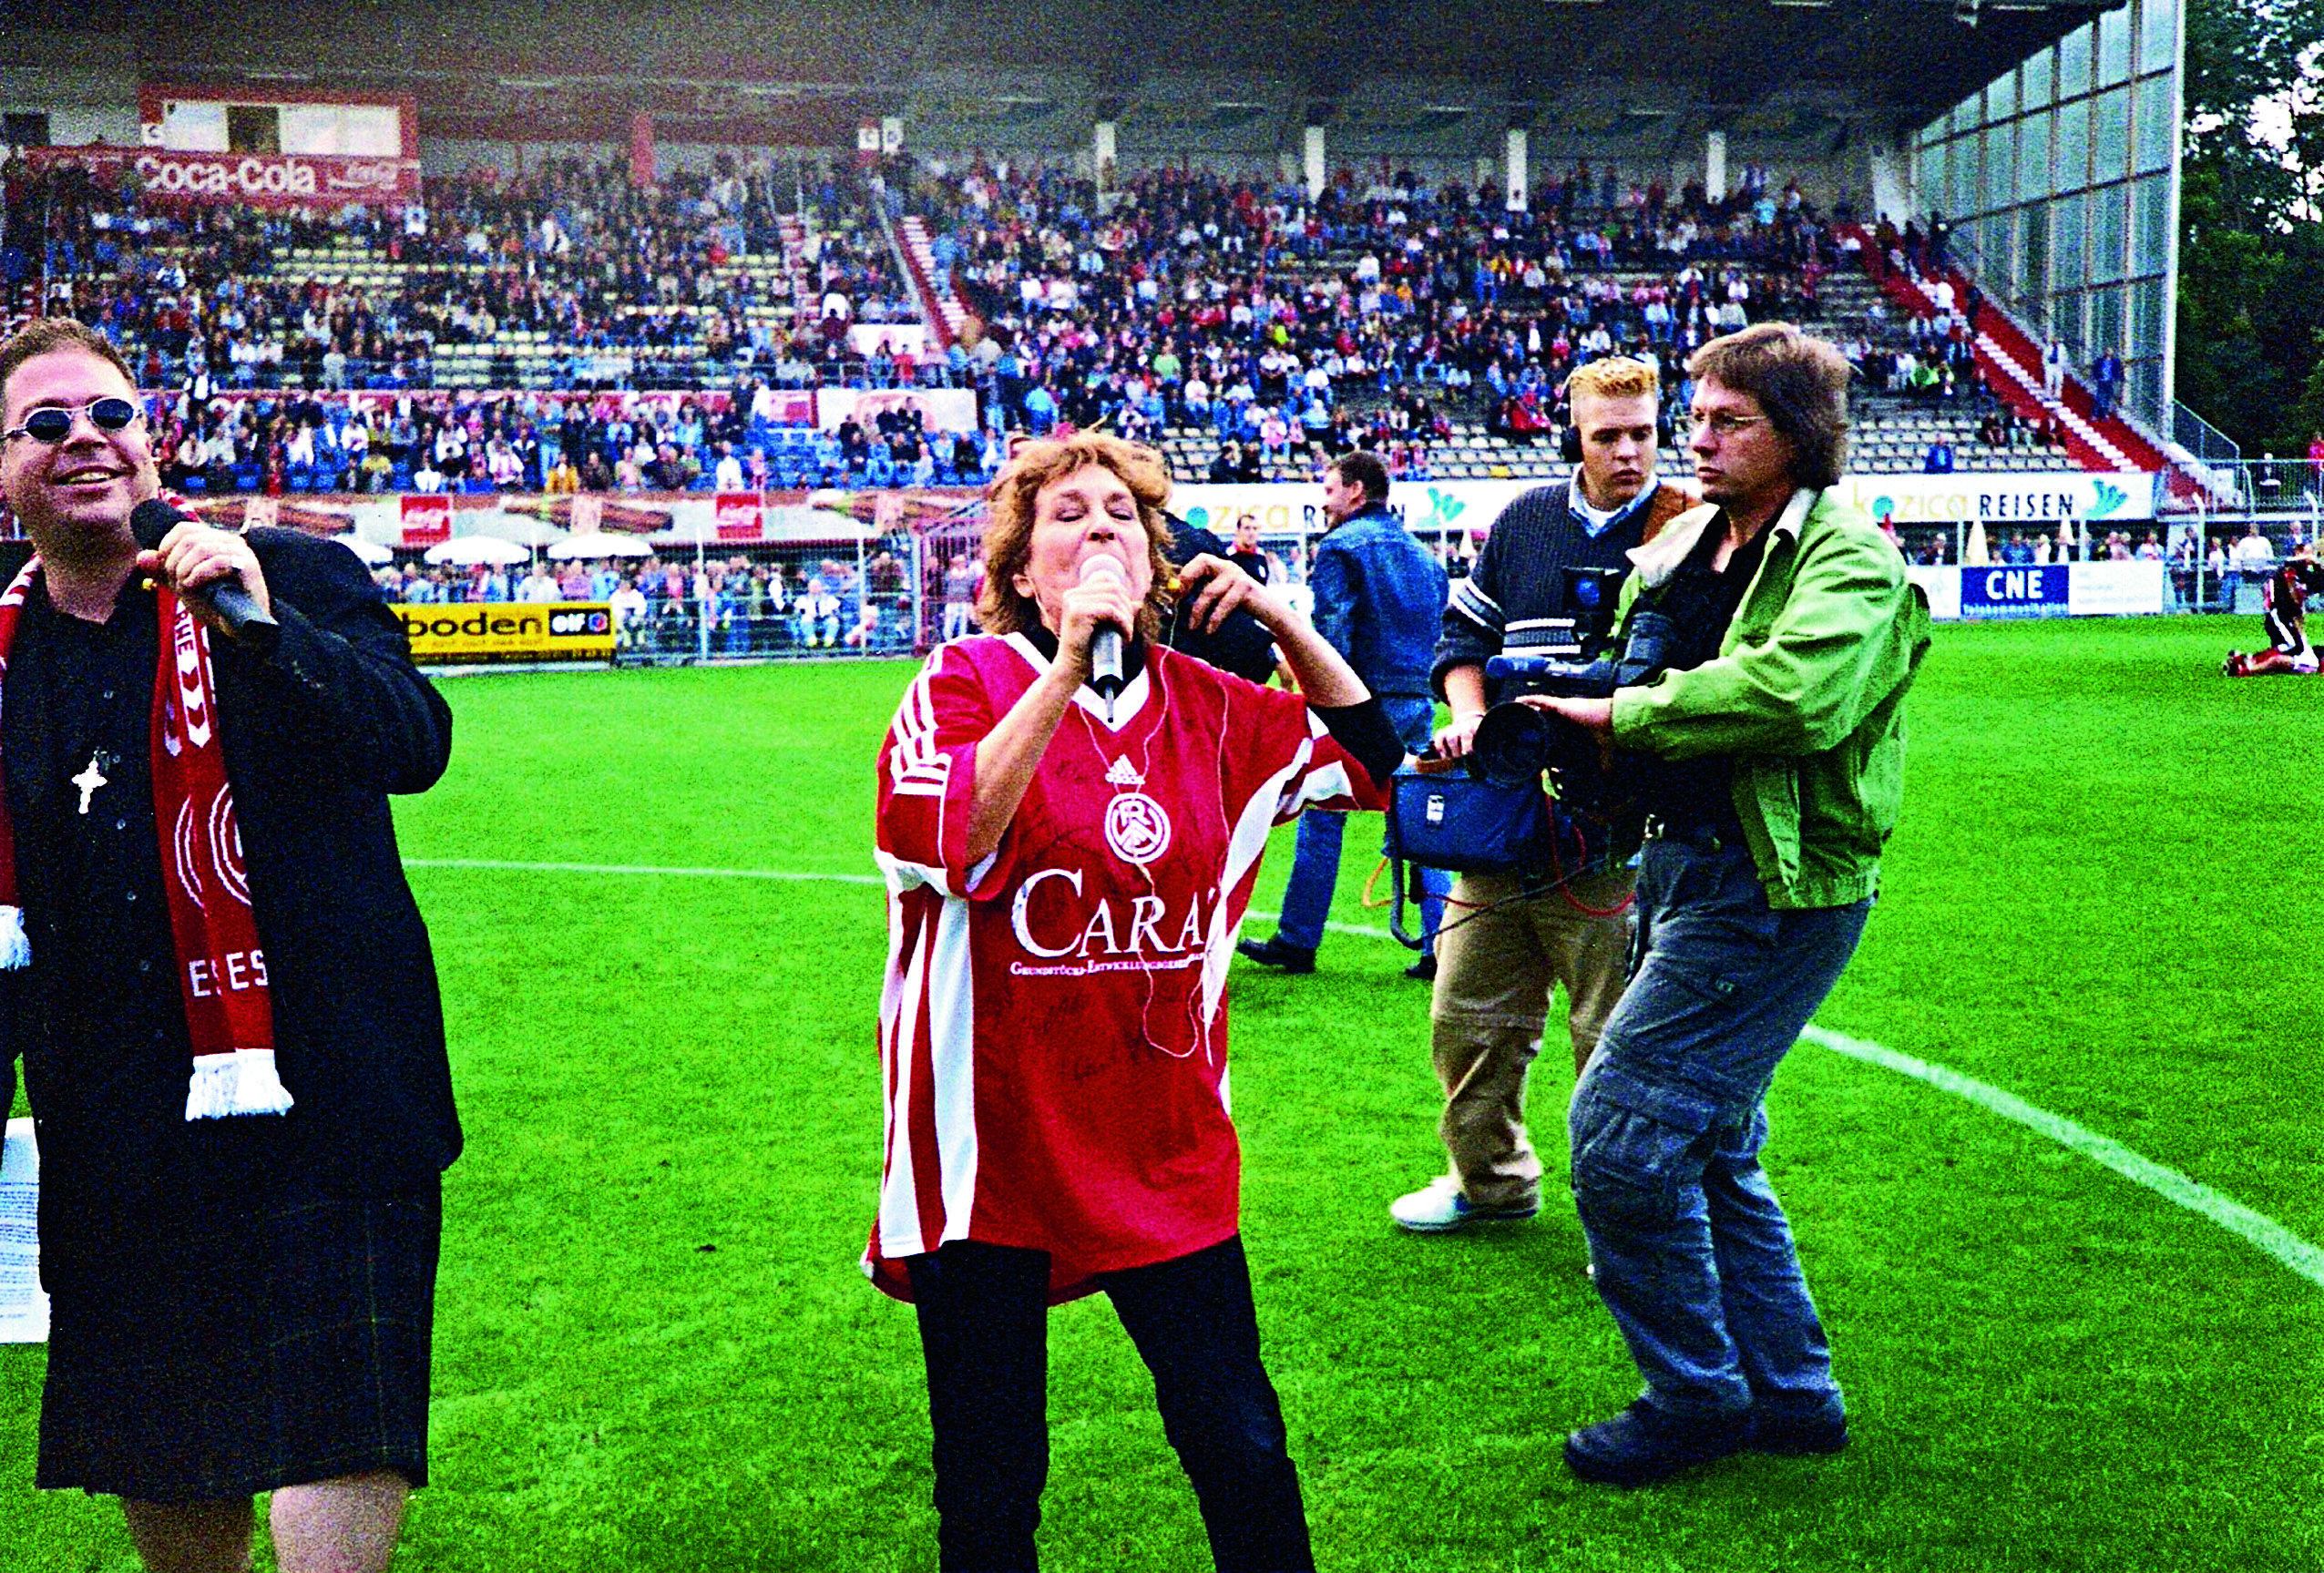 Adiole mit Siw Malmkvist 1999 im Georg-Melches-Stadion.